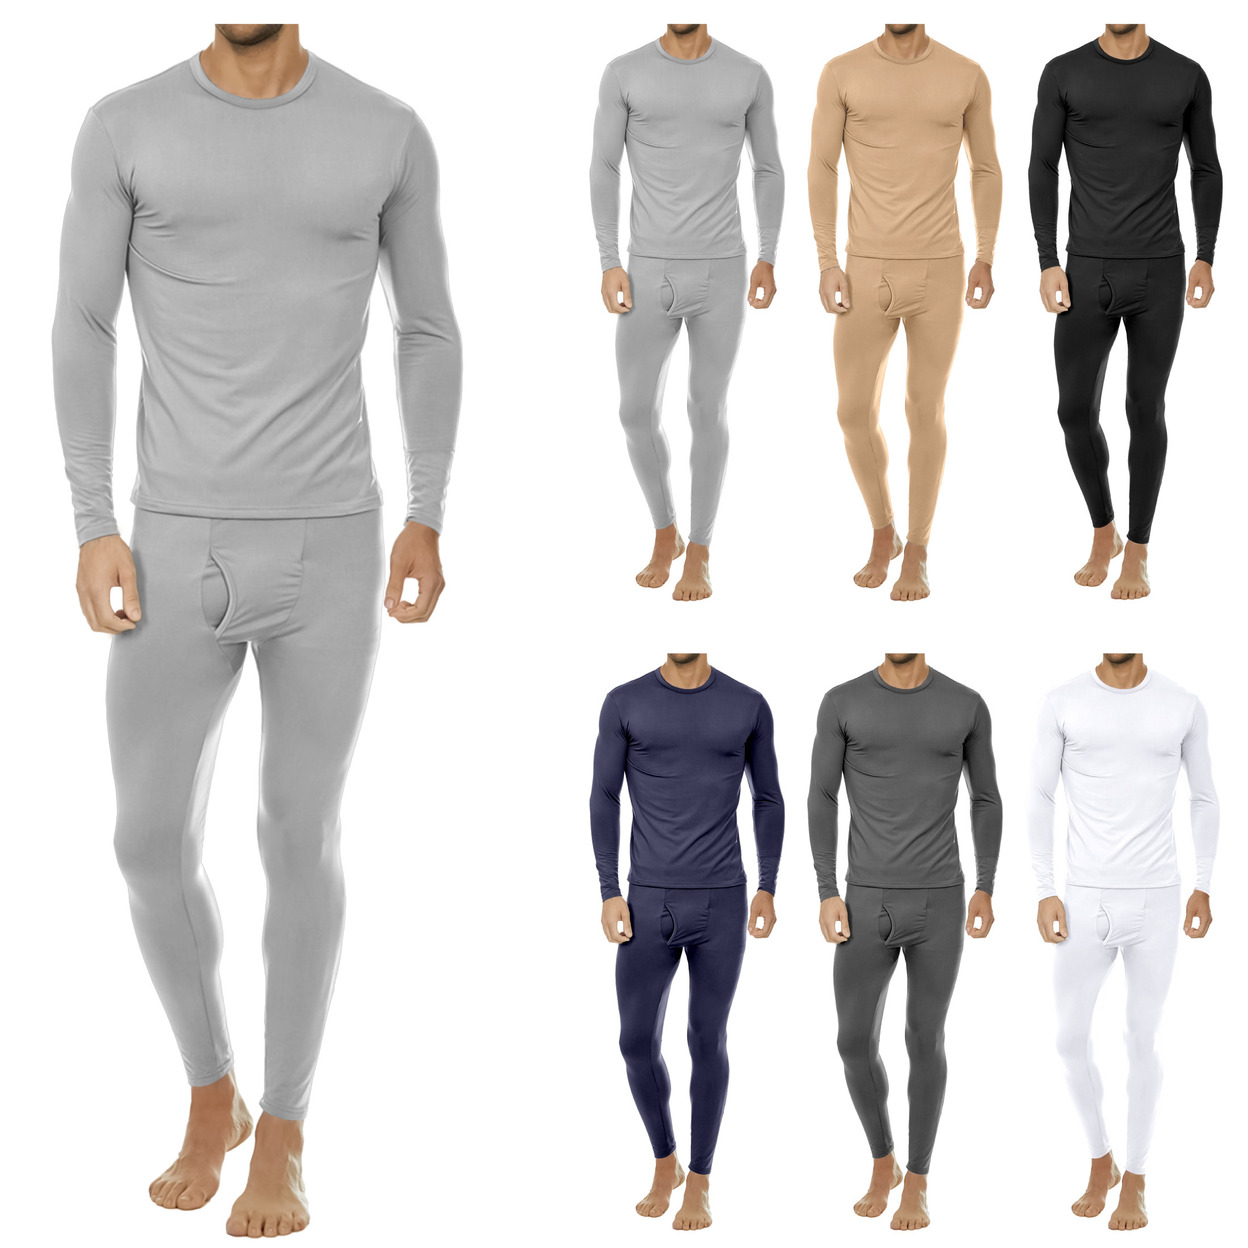 2-Sets: Men's Winter Warm Fleece Lined Thermal Underwear Set For Cold Weather - Grey&navy, Medium